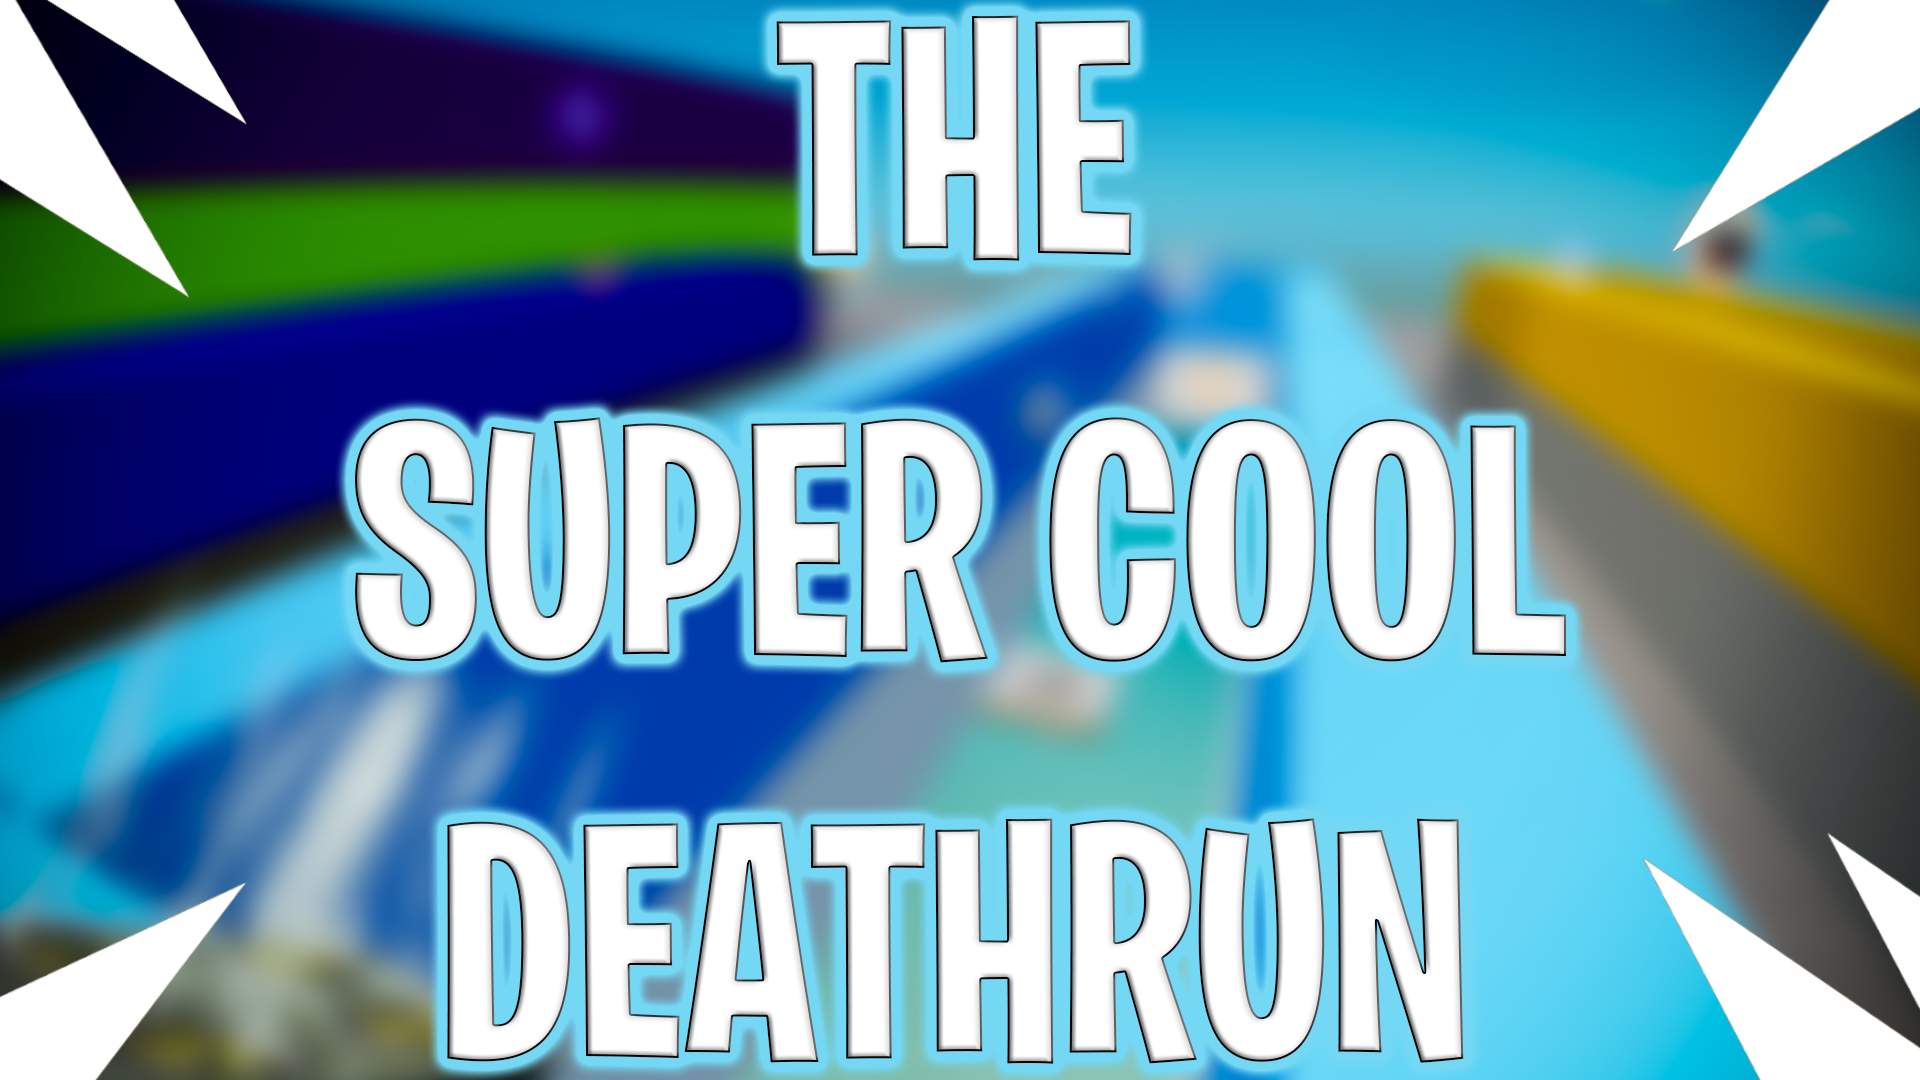 THE SUPER COOL DEATHRUN